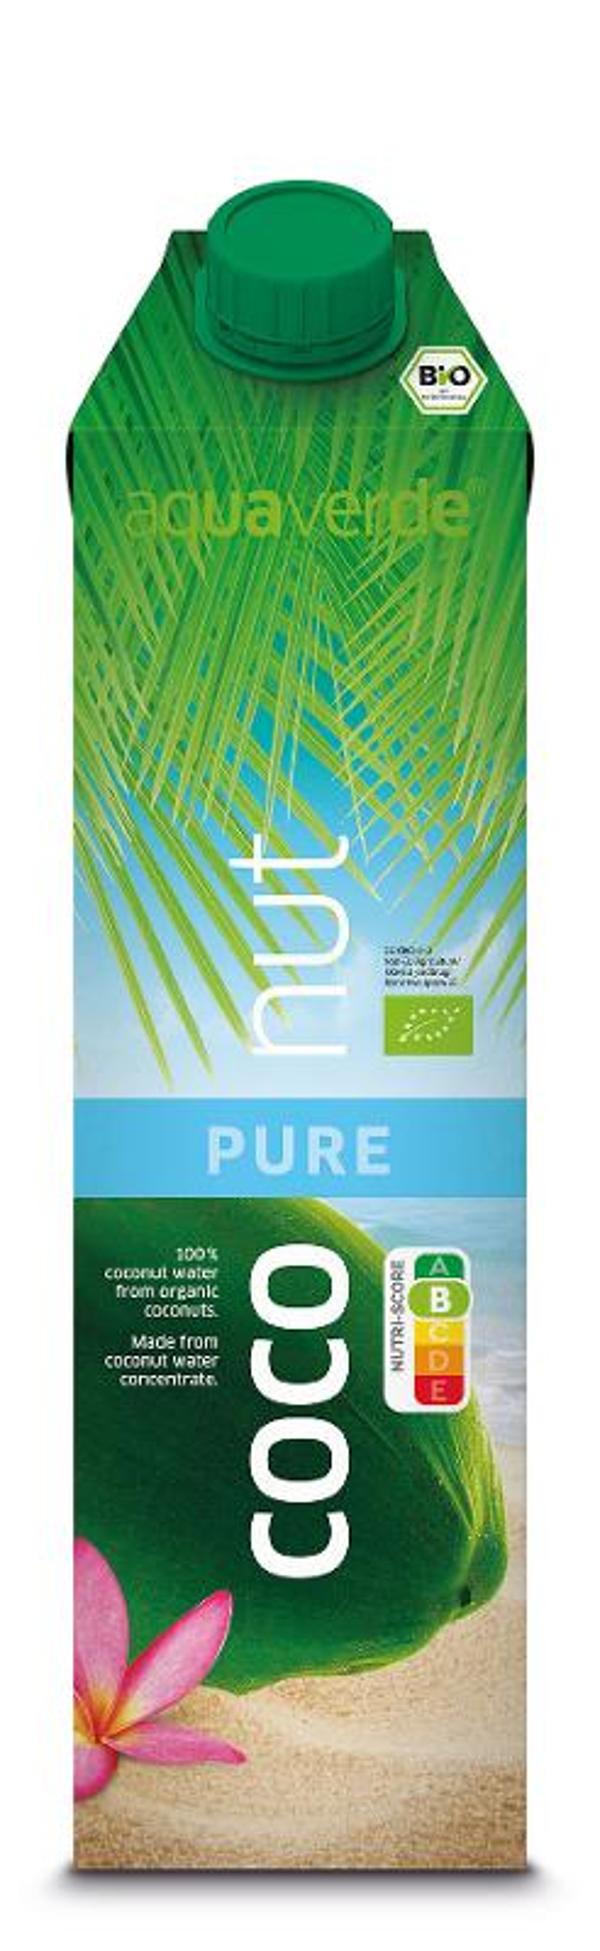 Produktfoto zu Aqua Verde Kokoswasser, 1l